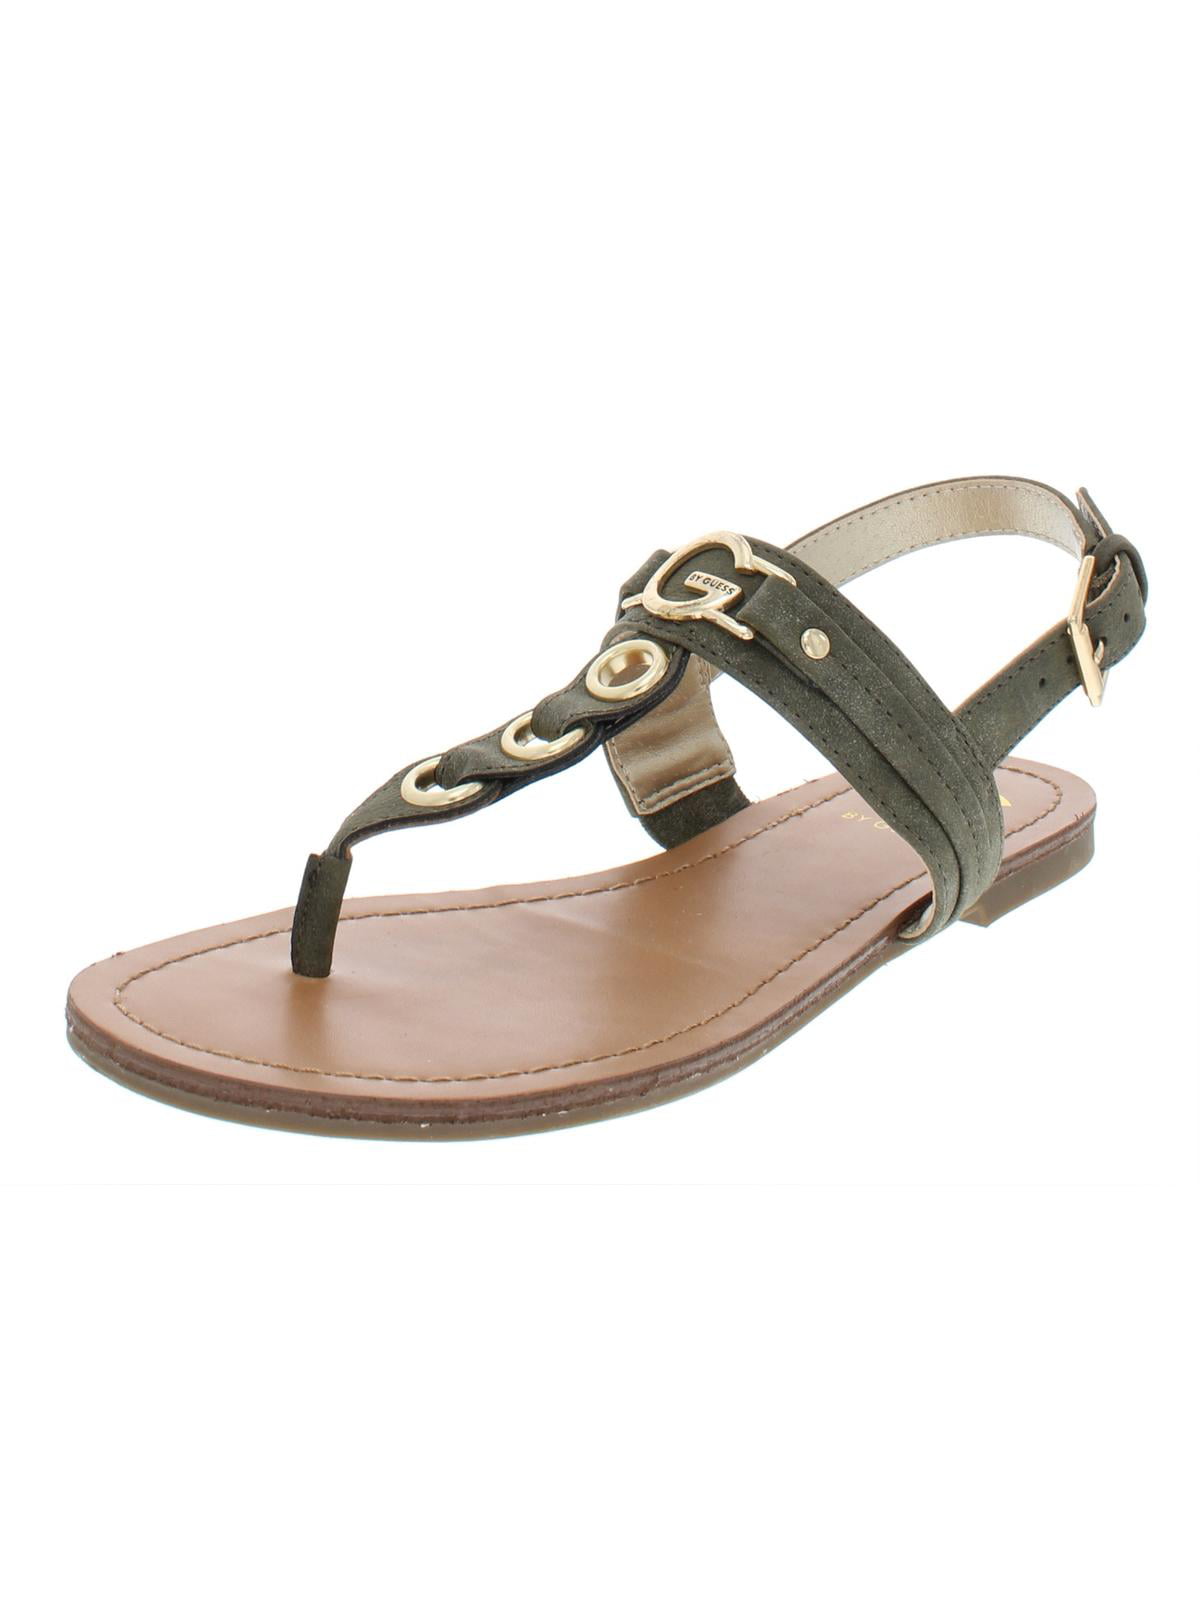 G by Guess Womens Lesha Faux Leather T-Strap Flat Sandals - Walmart.com